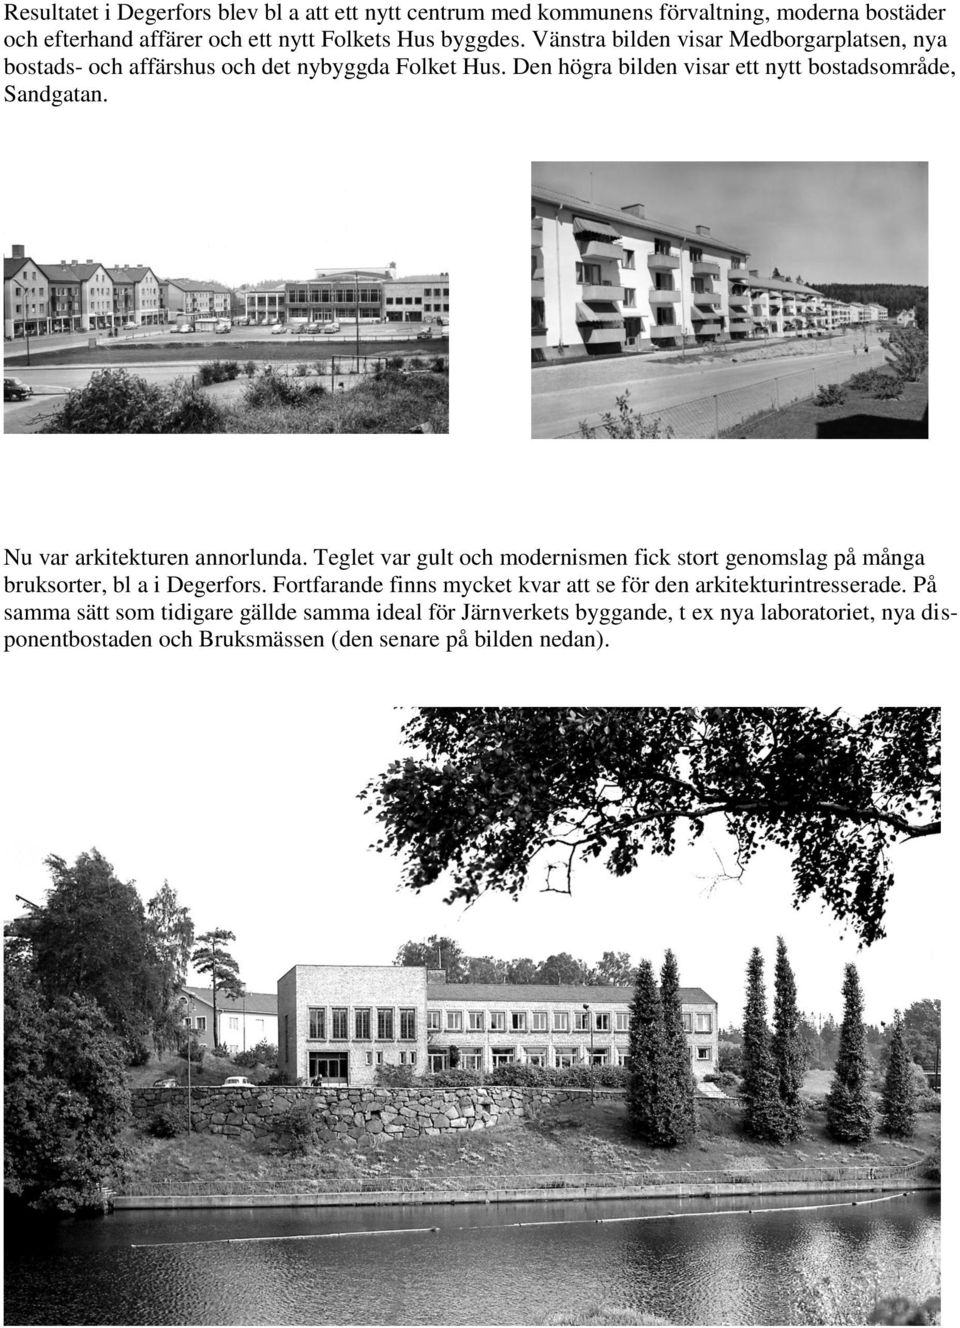 Nu var arkitekturen annorlunda. Teglet var gult och modernismen fick stort genomslag på många bruksorter, bl a i Degerfors.